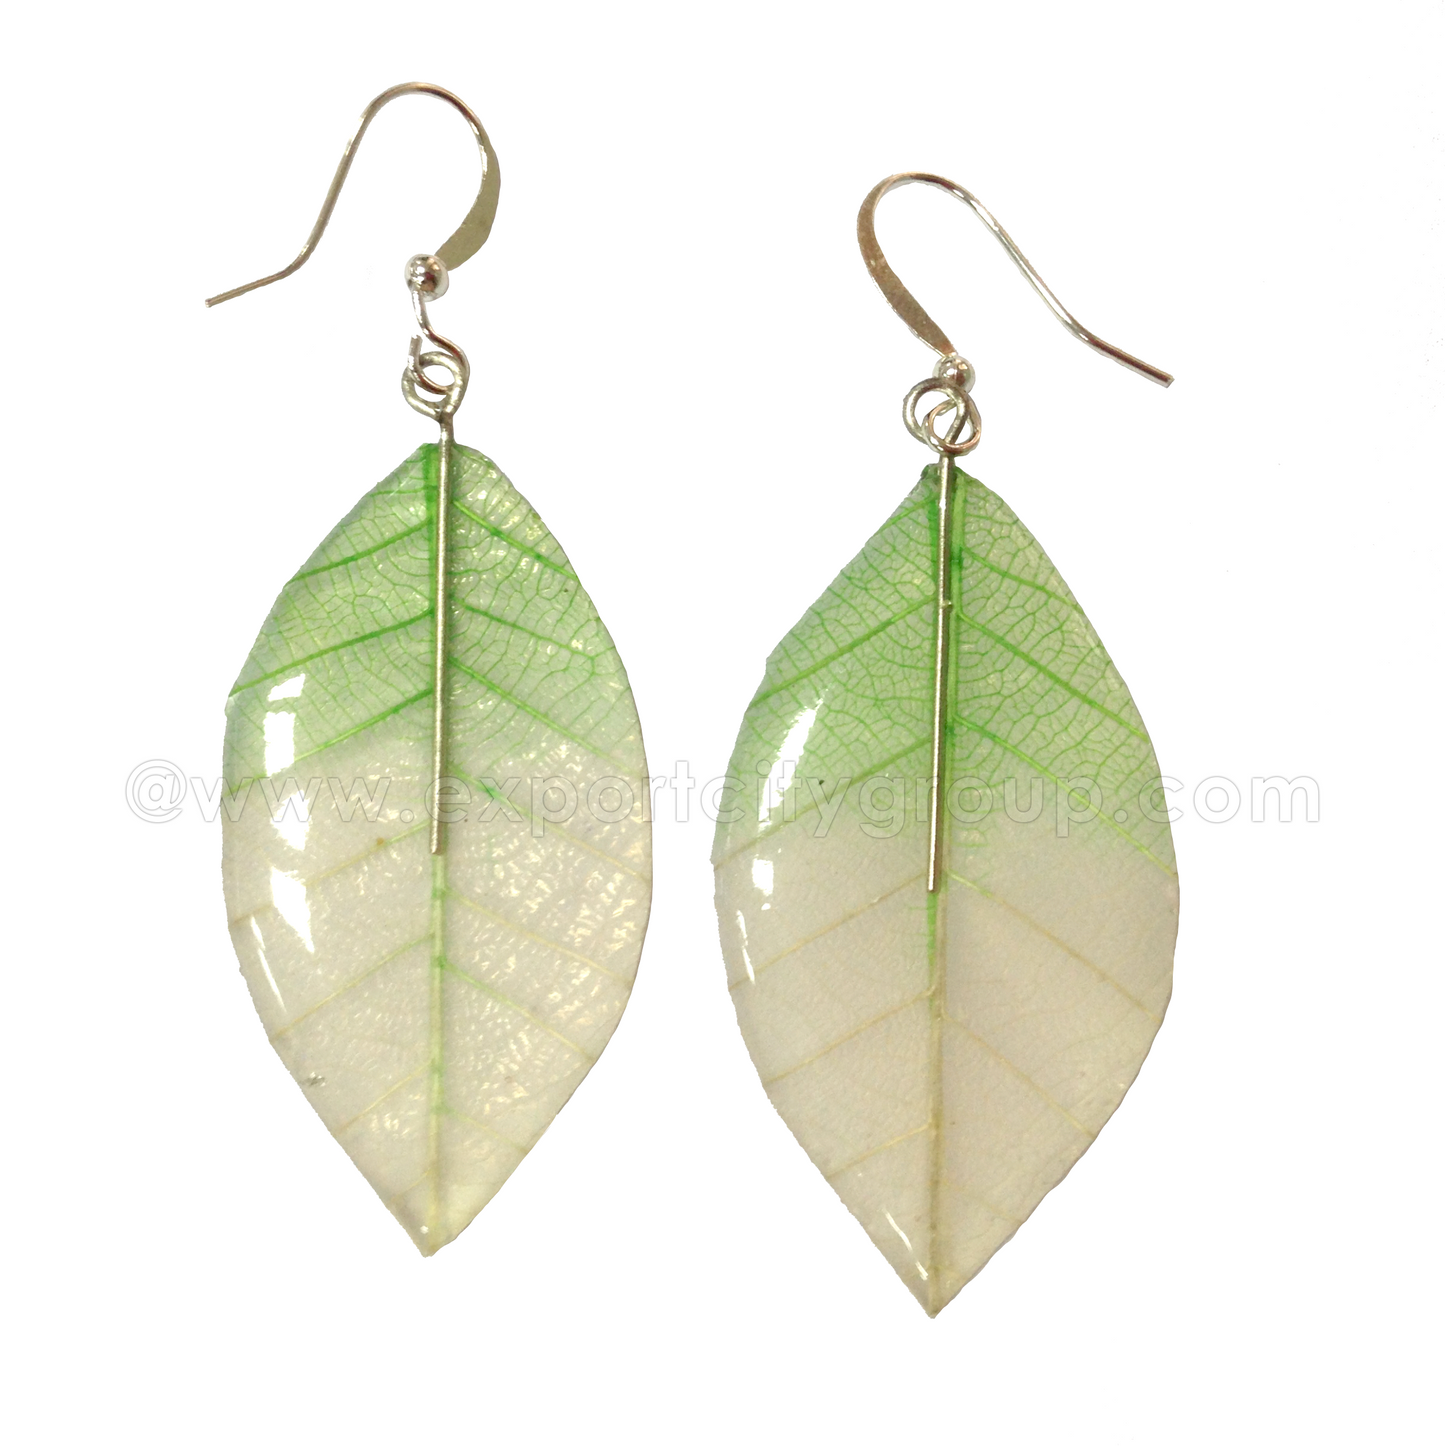 Real Leaf Jewelry Earring (Green Clear)